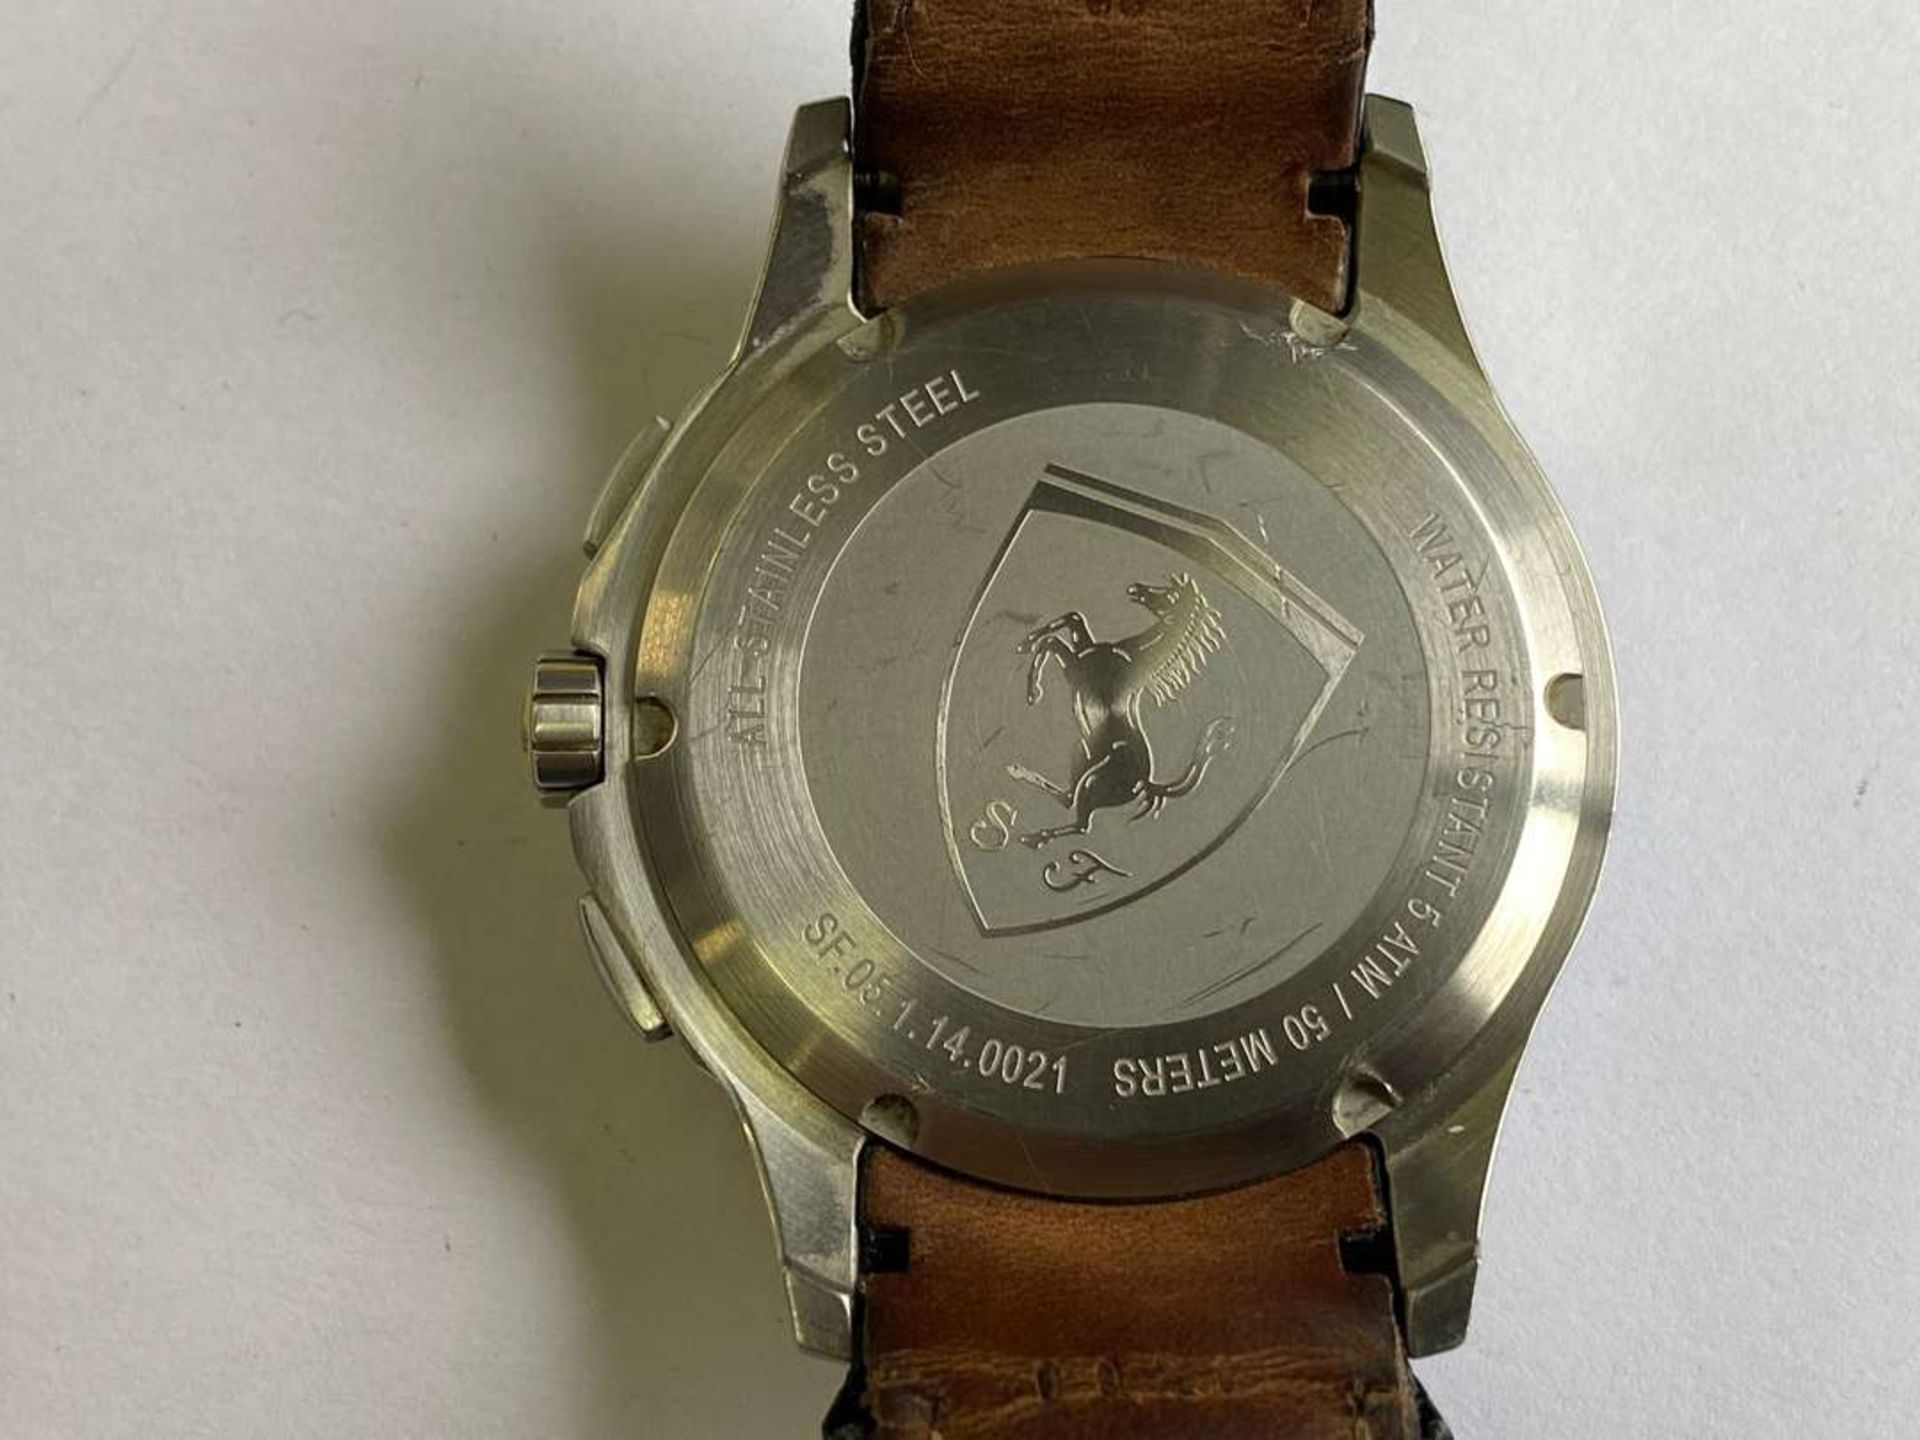 FERRARI, Scuderia, a quartz, stainless steel, two button chronograph wristwatch. - Image 4 of 4